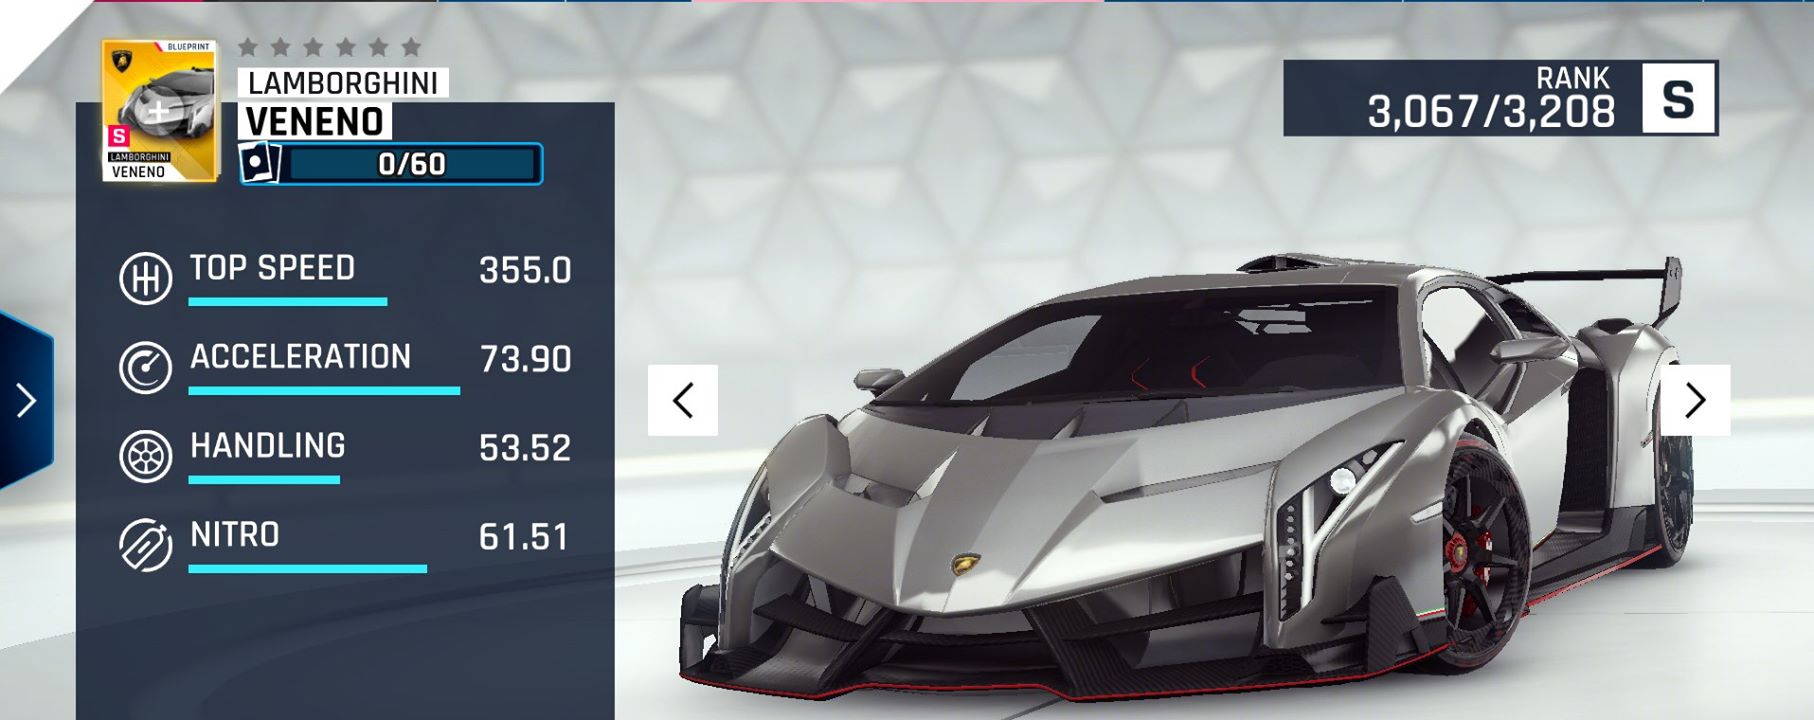 STILL A BEAST ?!?  Asphalt 8 Lamborghini Terzo Millennio